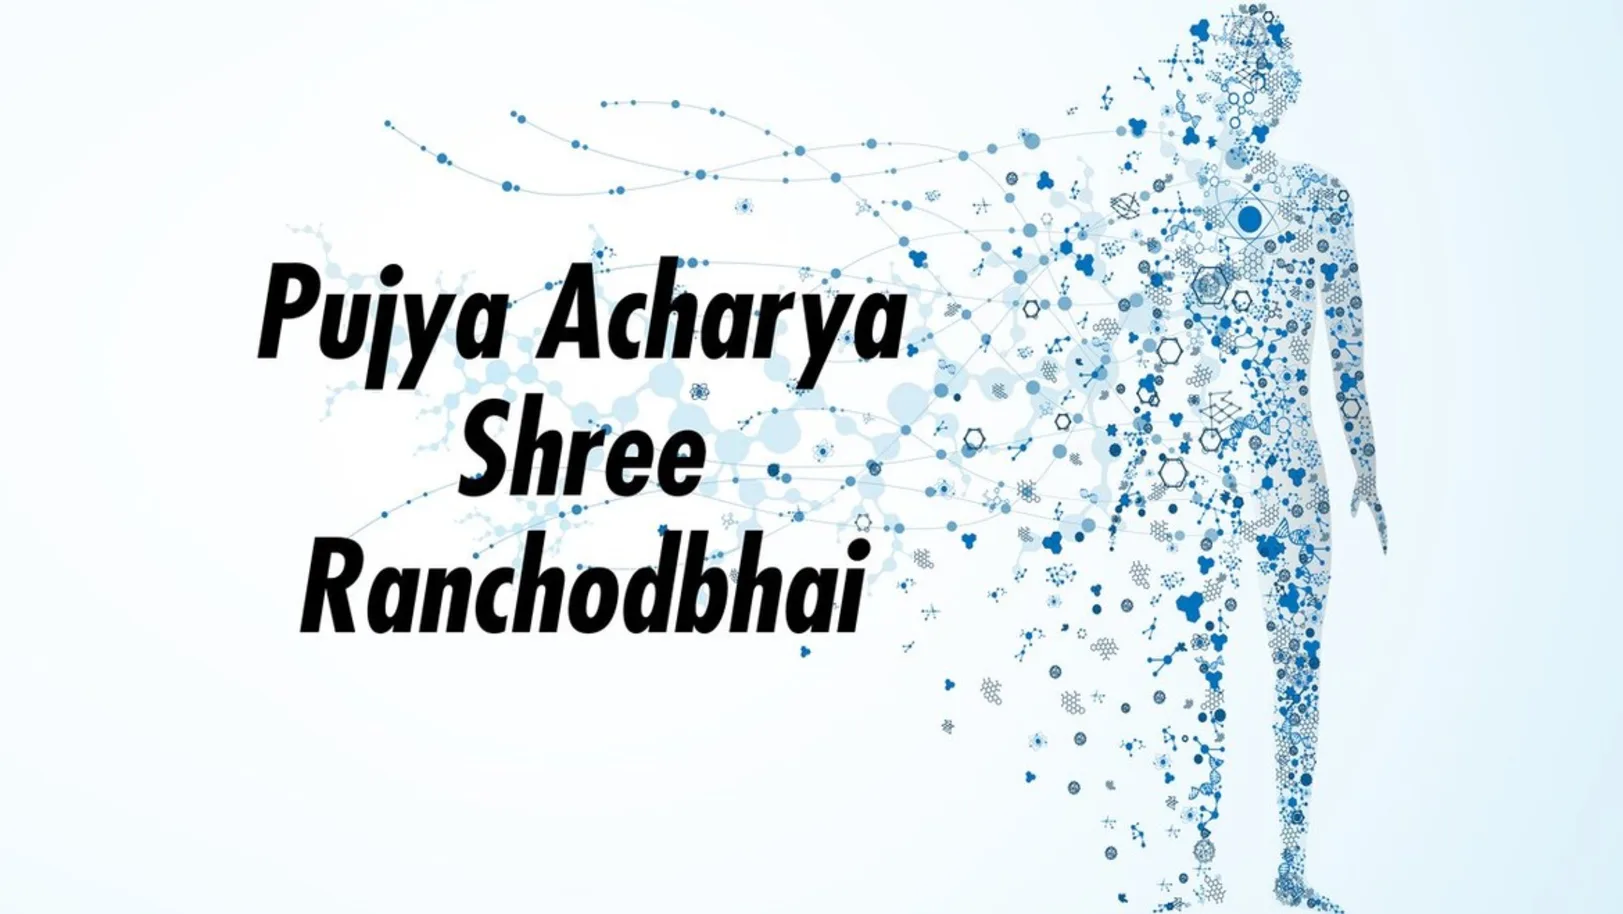 Pujya Acharya Shree Ranchodbhai Streaming Now On Aastha Gujarati